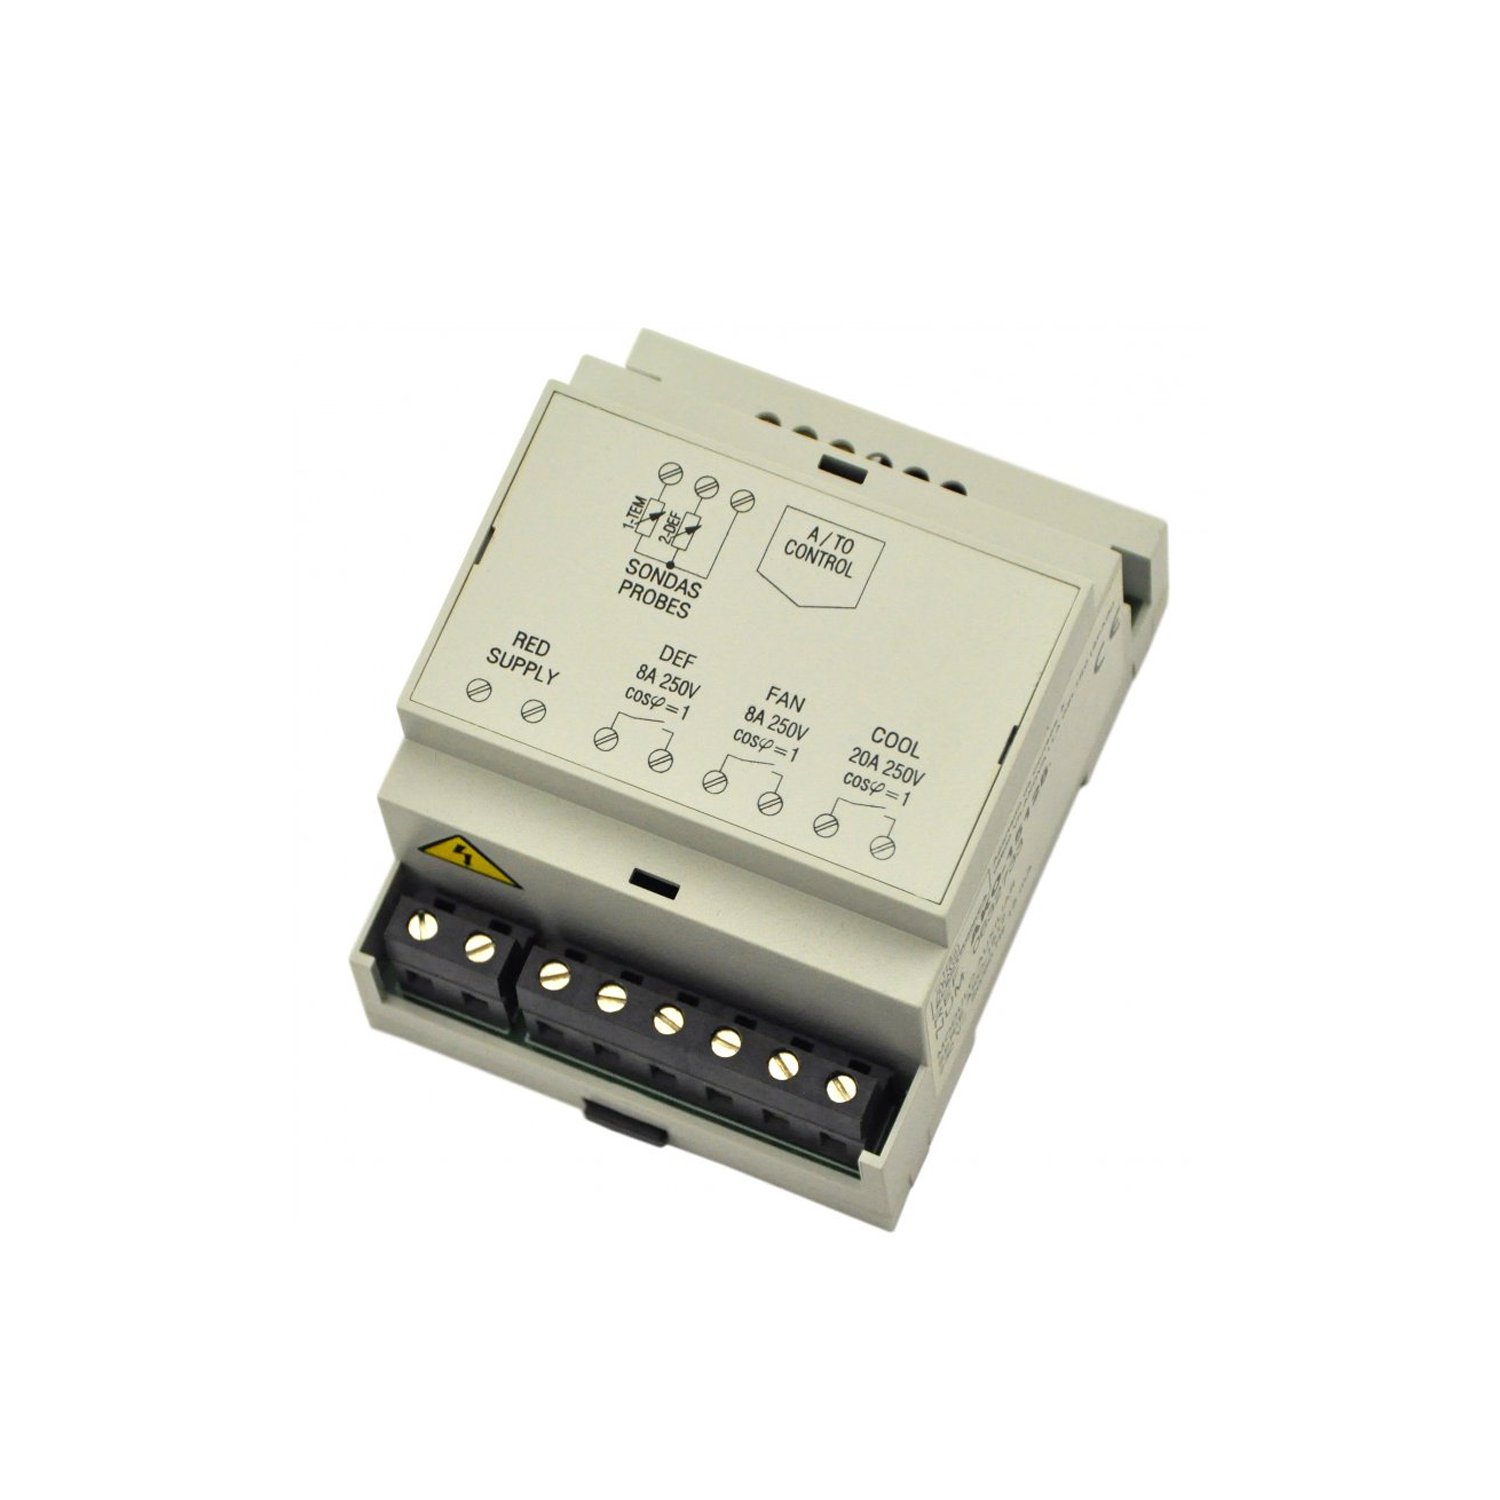 Laadmodule AKO 15128 230V AC, NTC-relaisuitgangen 3, zonder controle